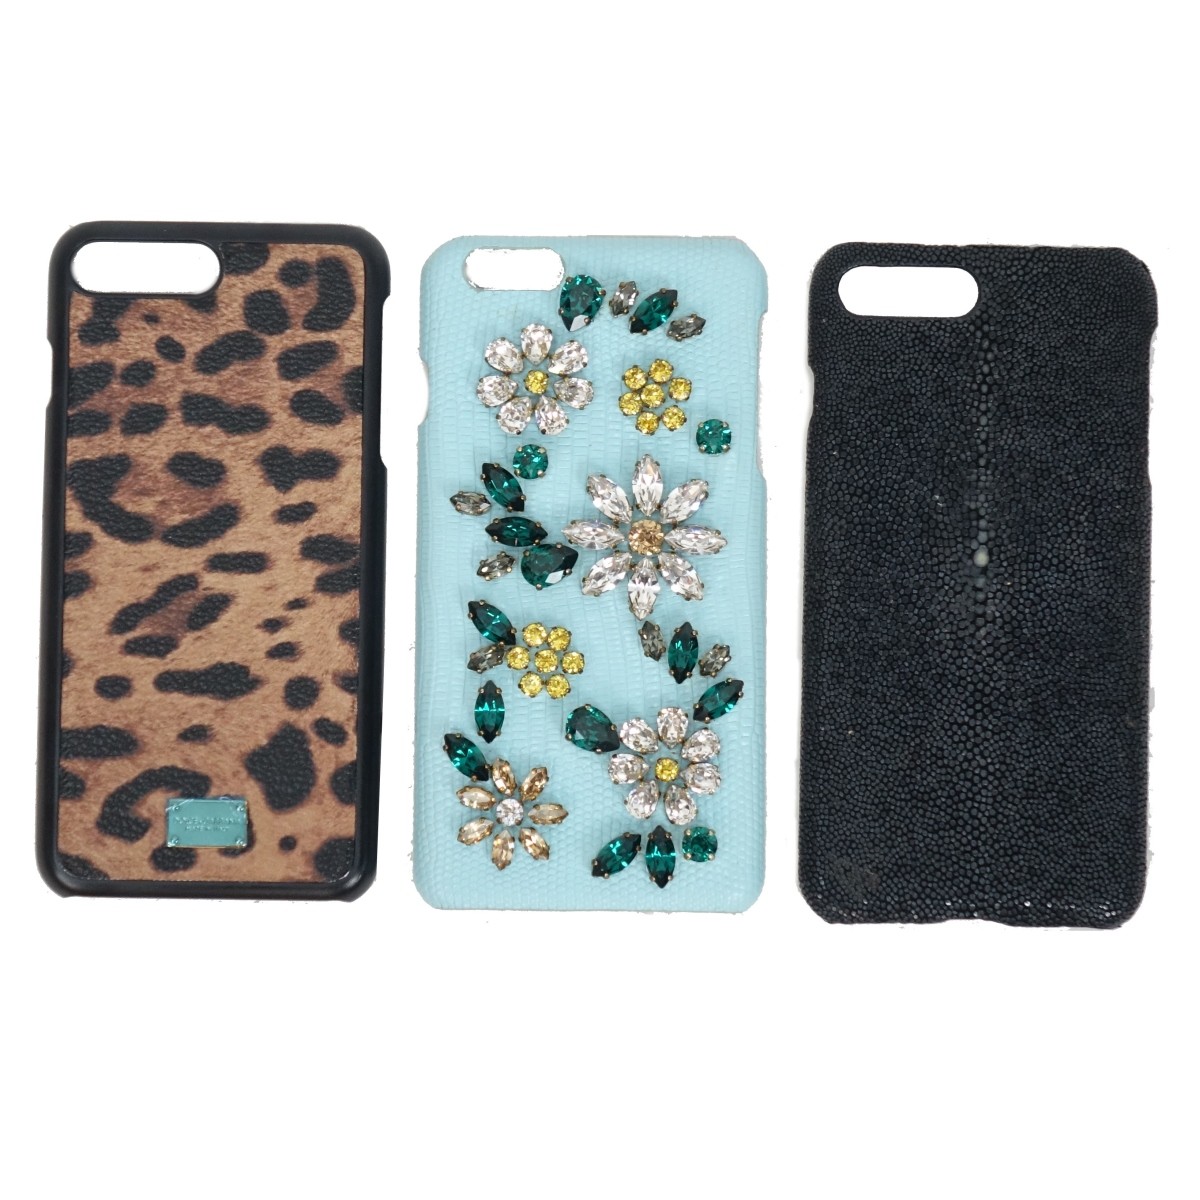 Dolce & Gabbana Iphone 6+ Cases